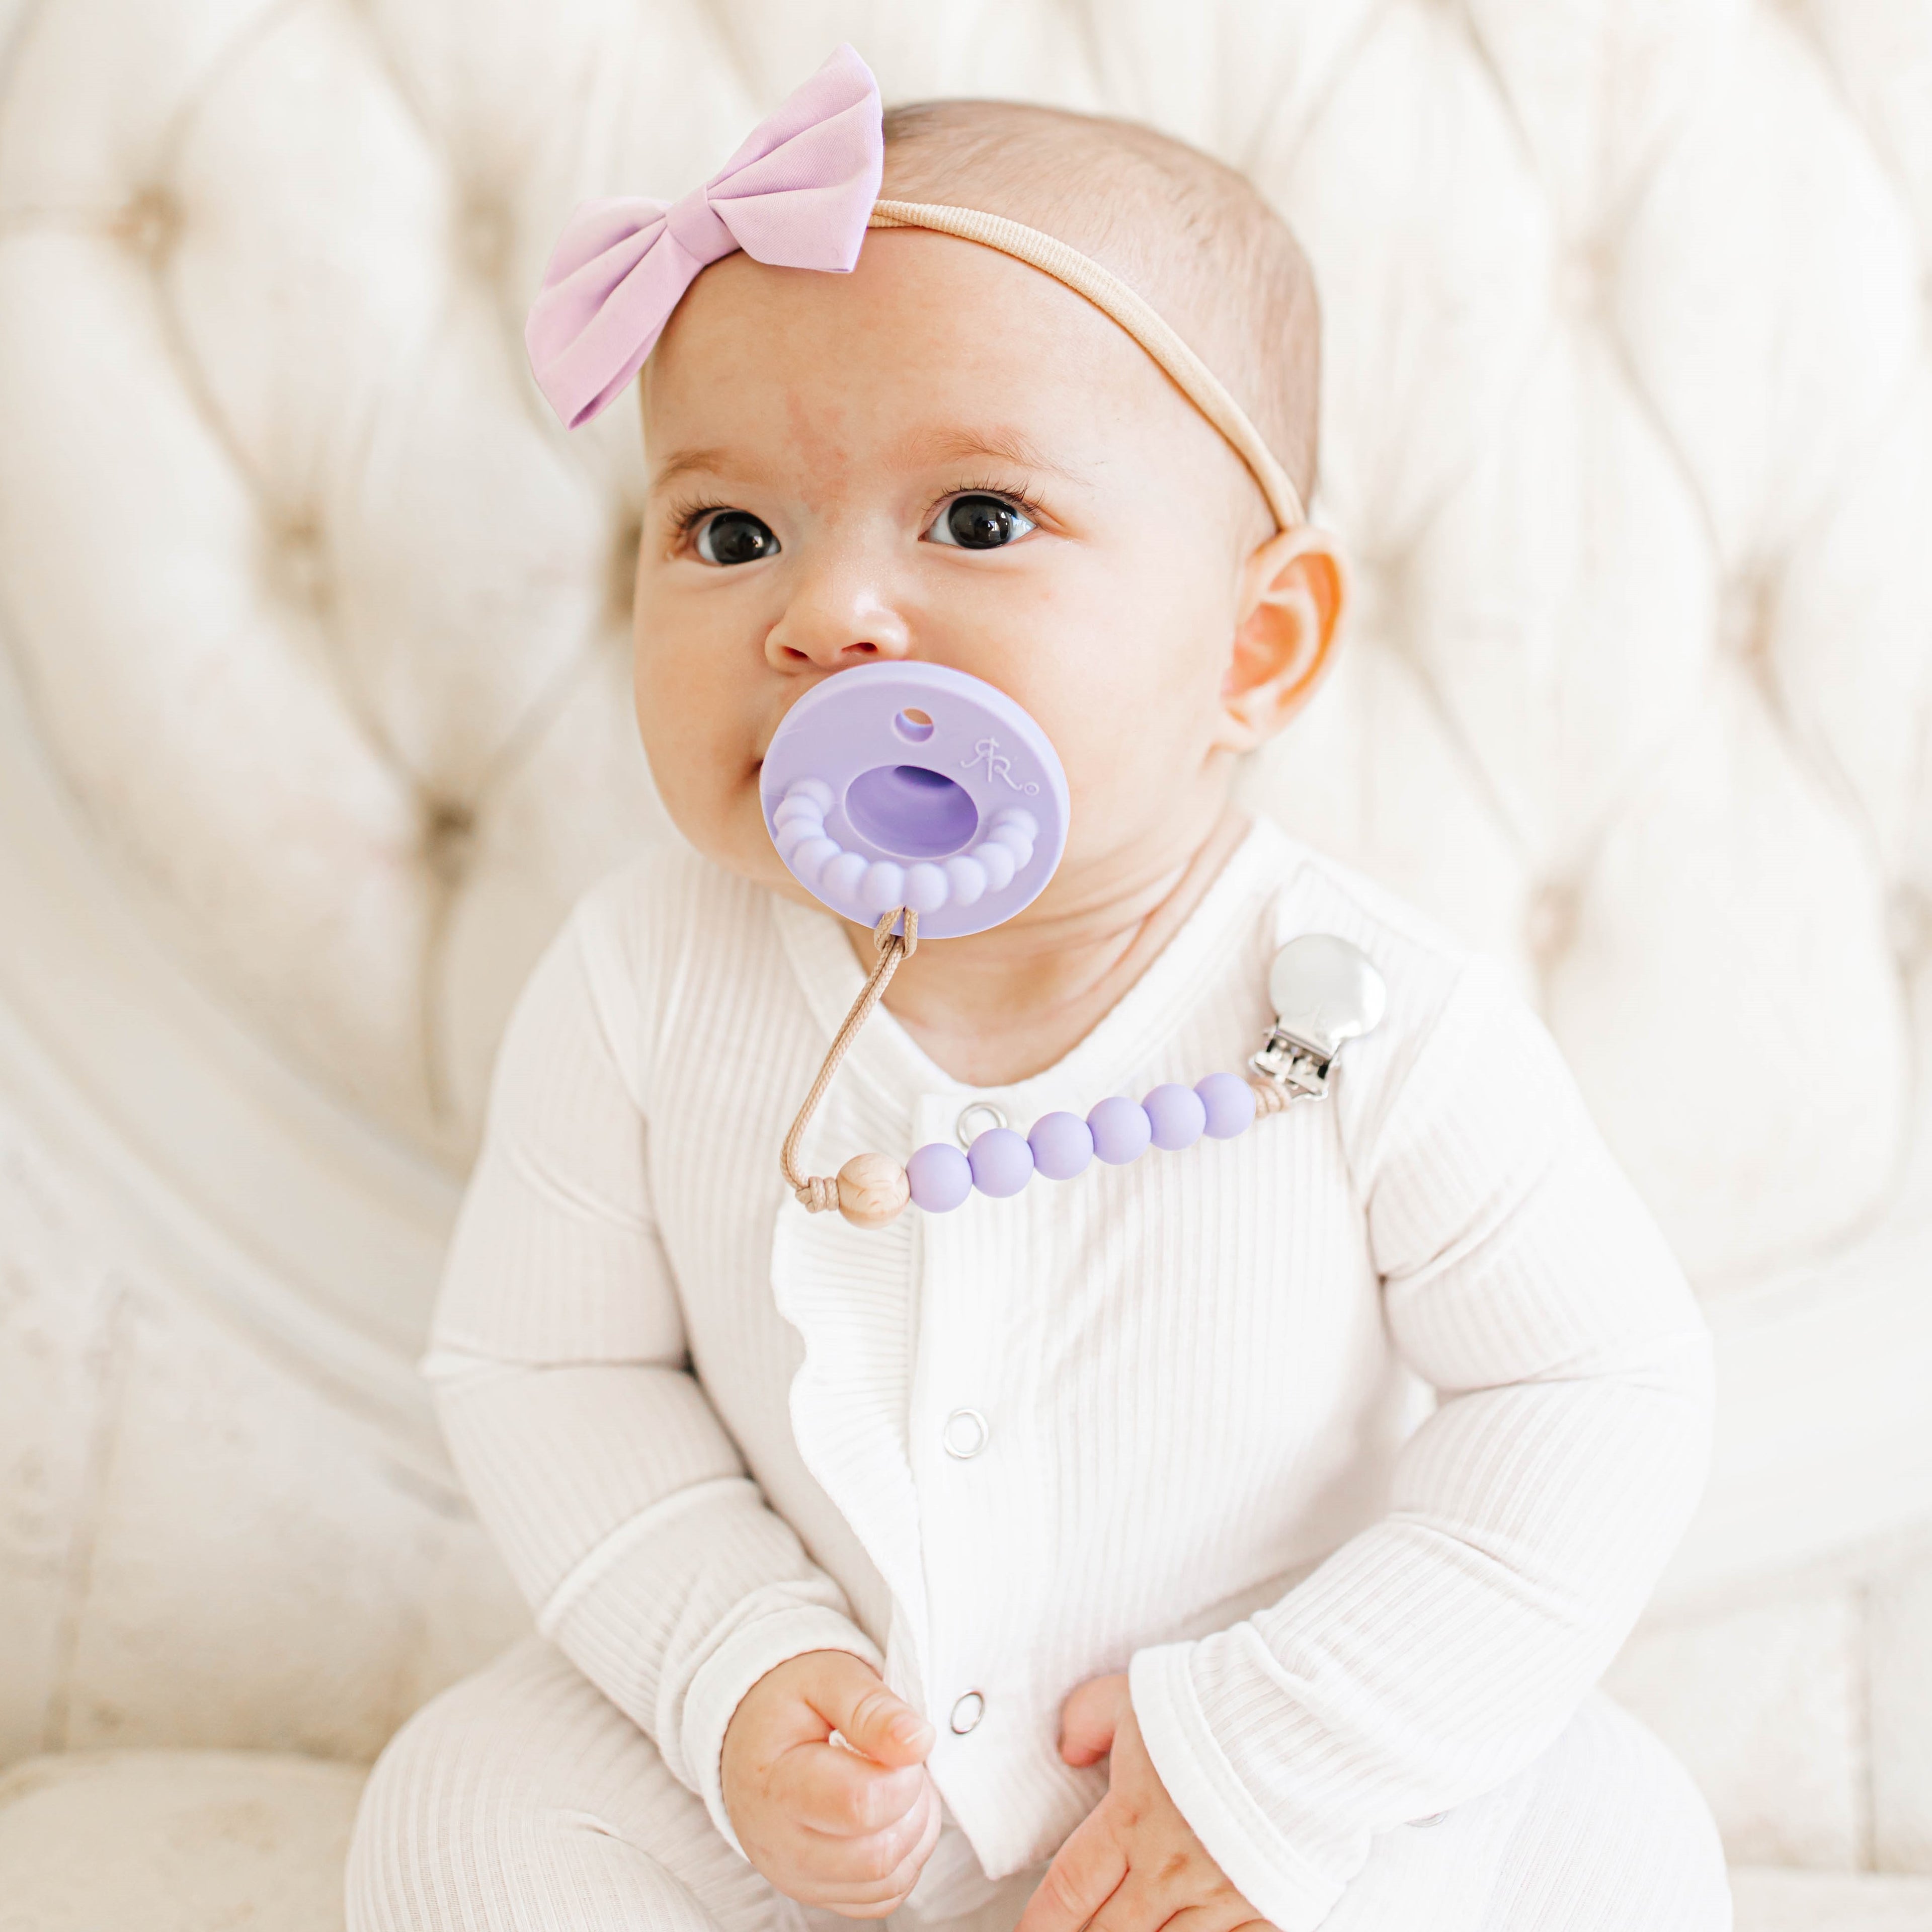 Baby using Lavender Cutie PAT Flat.